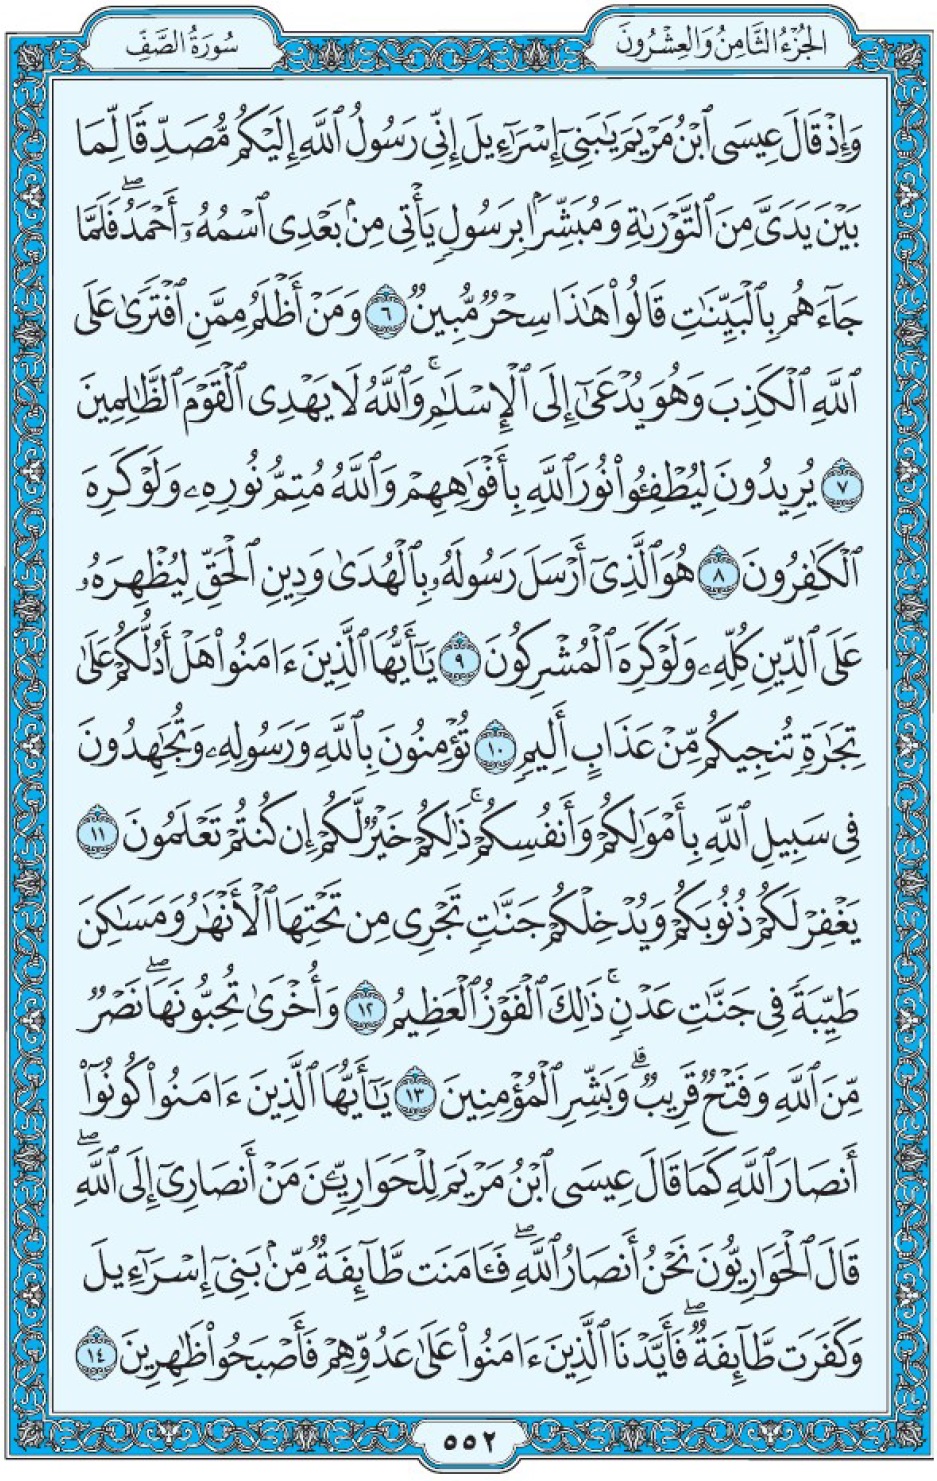 Коран Мединский мусхаф страница 552, ас-Сафф, аят 6-14